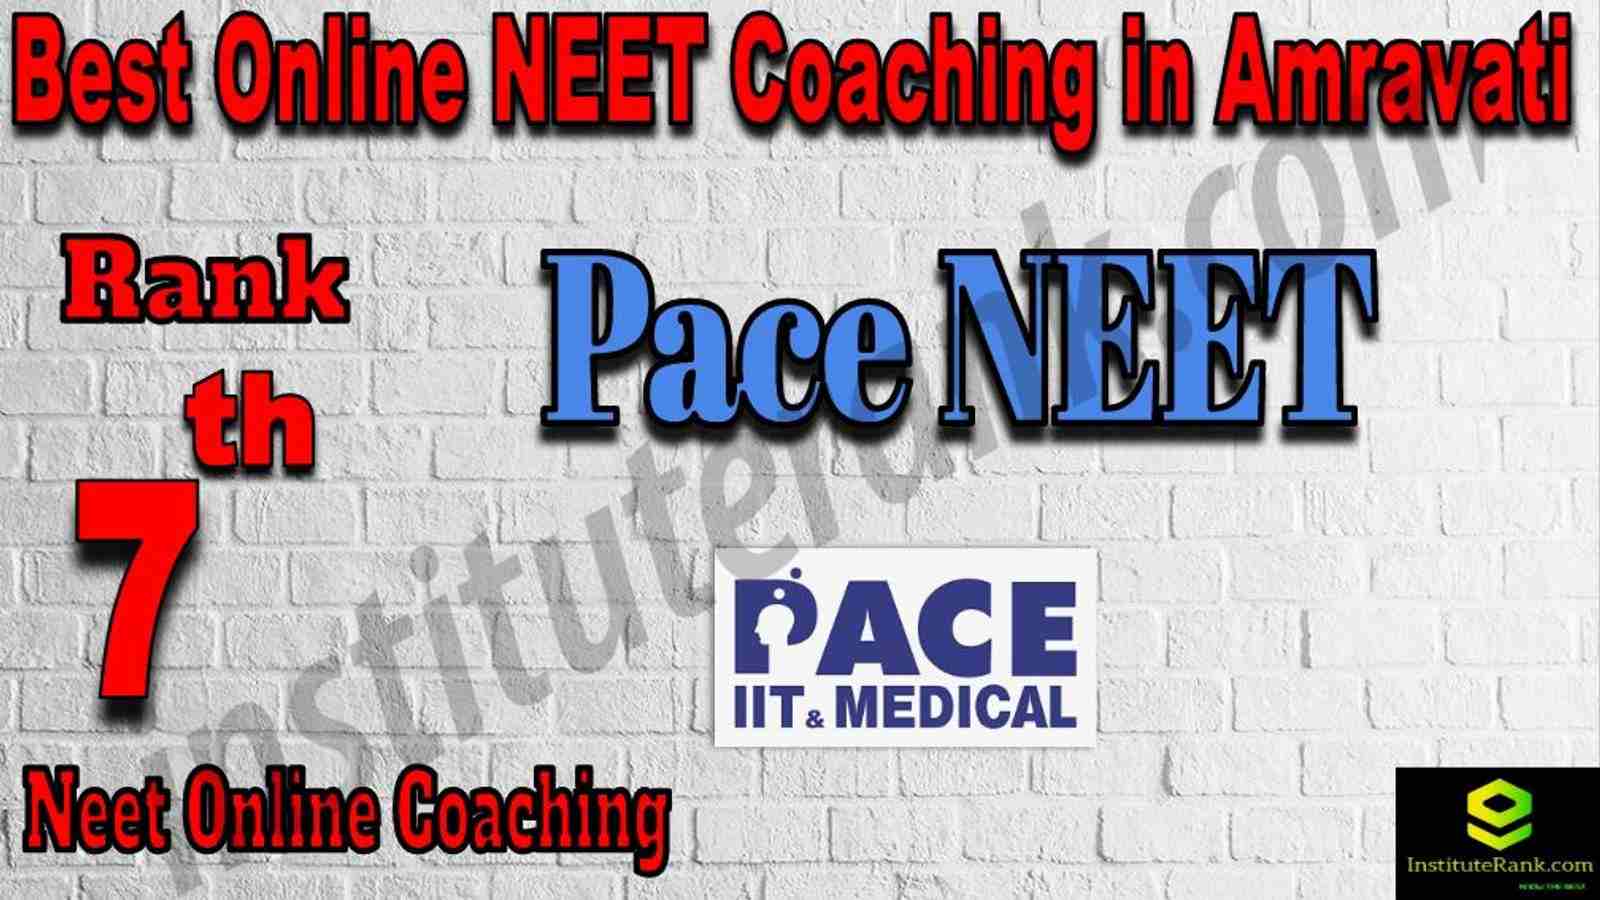 7th Best Online Neet Coaching in Amravati